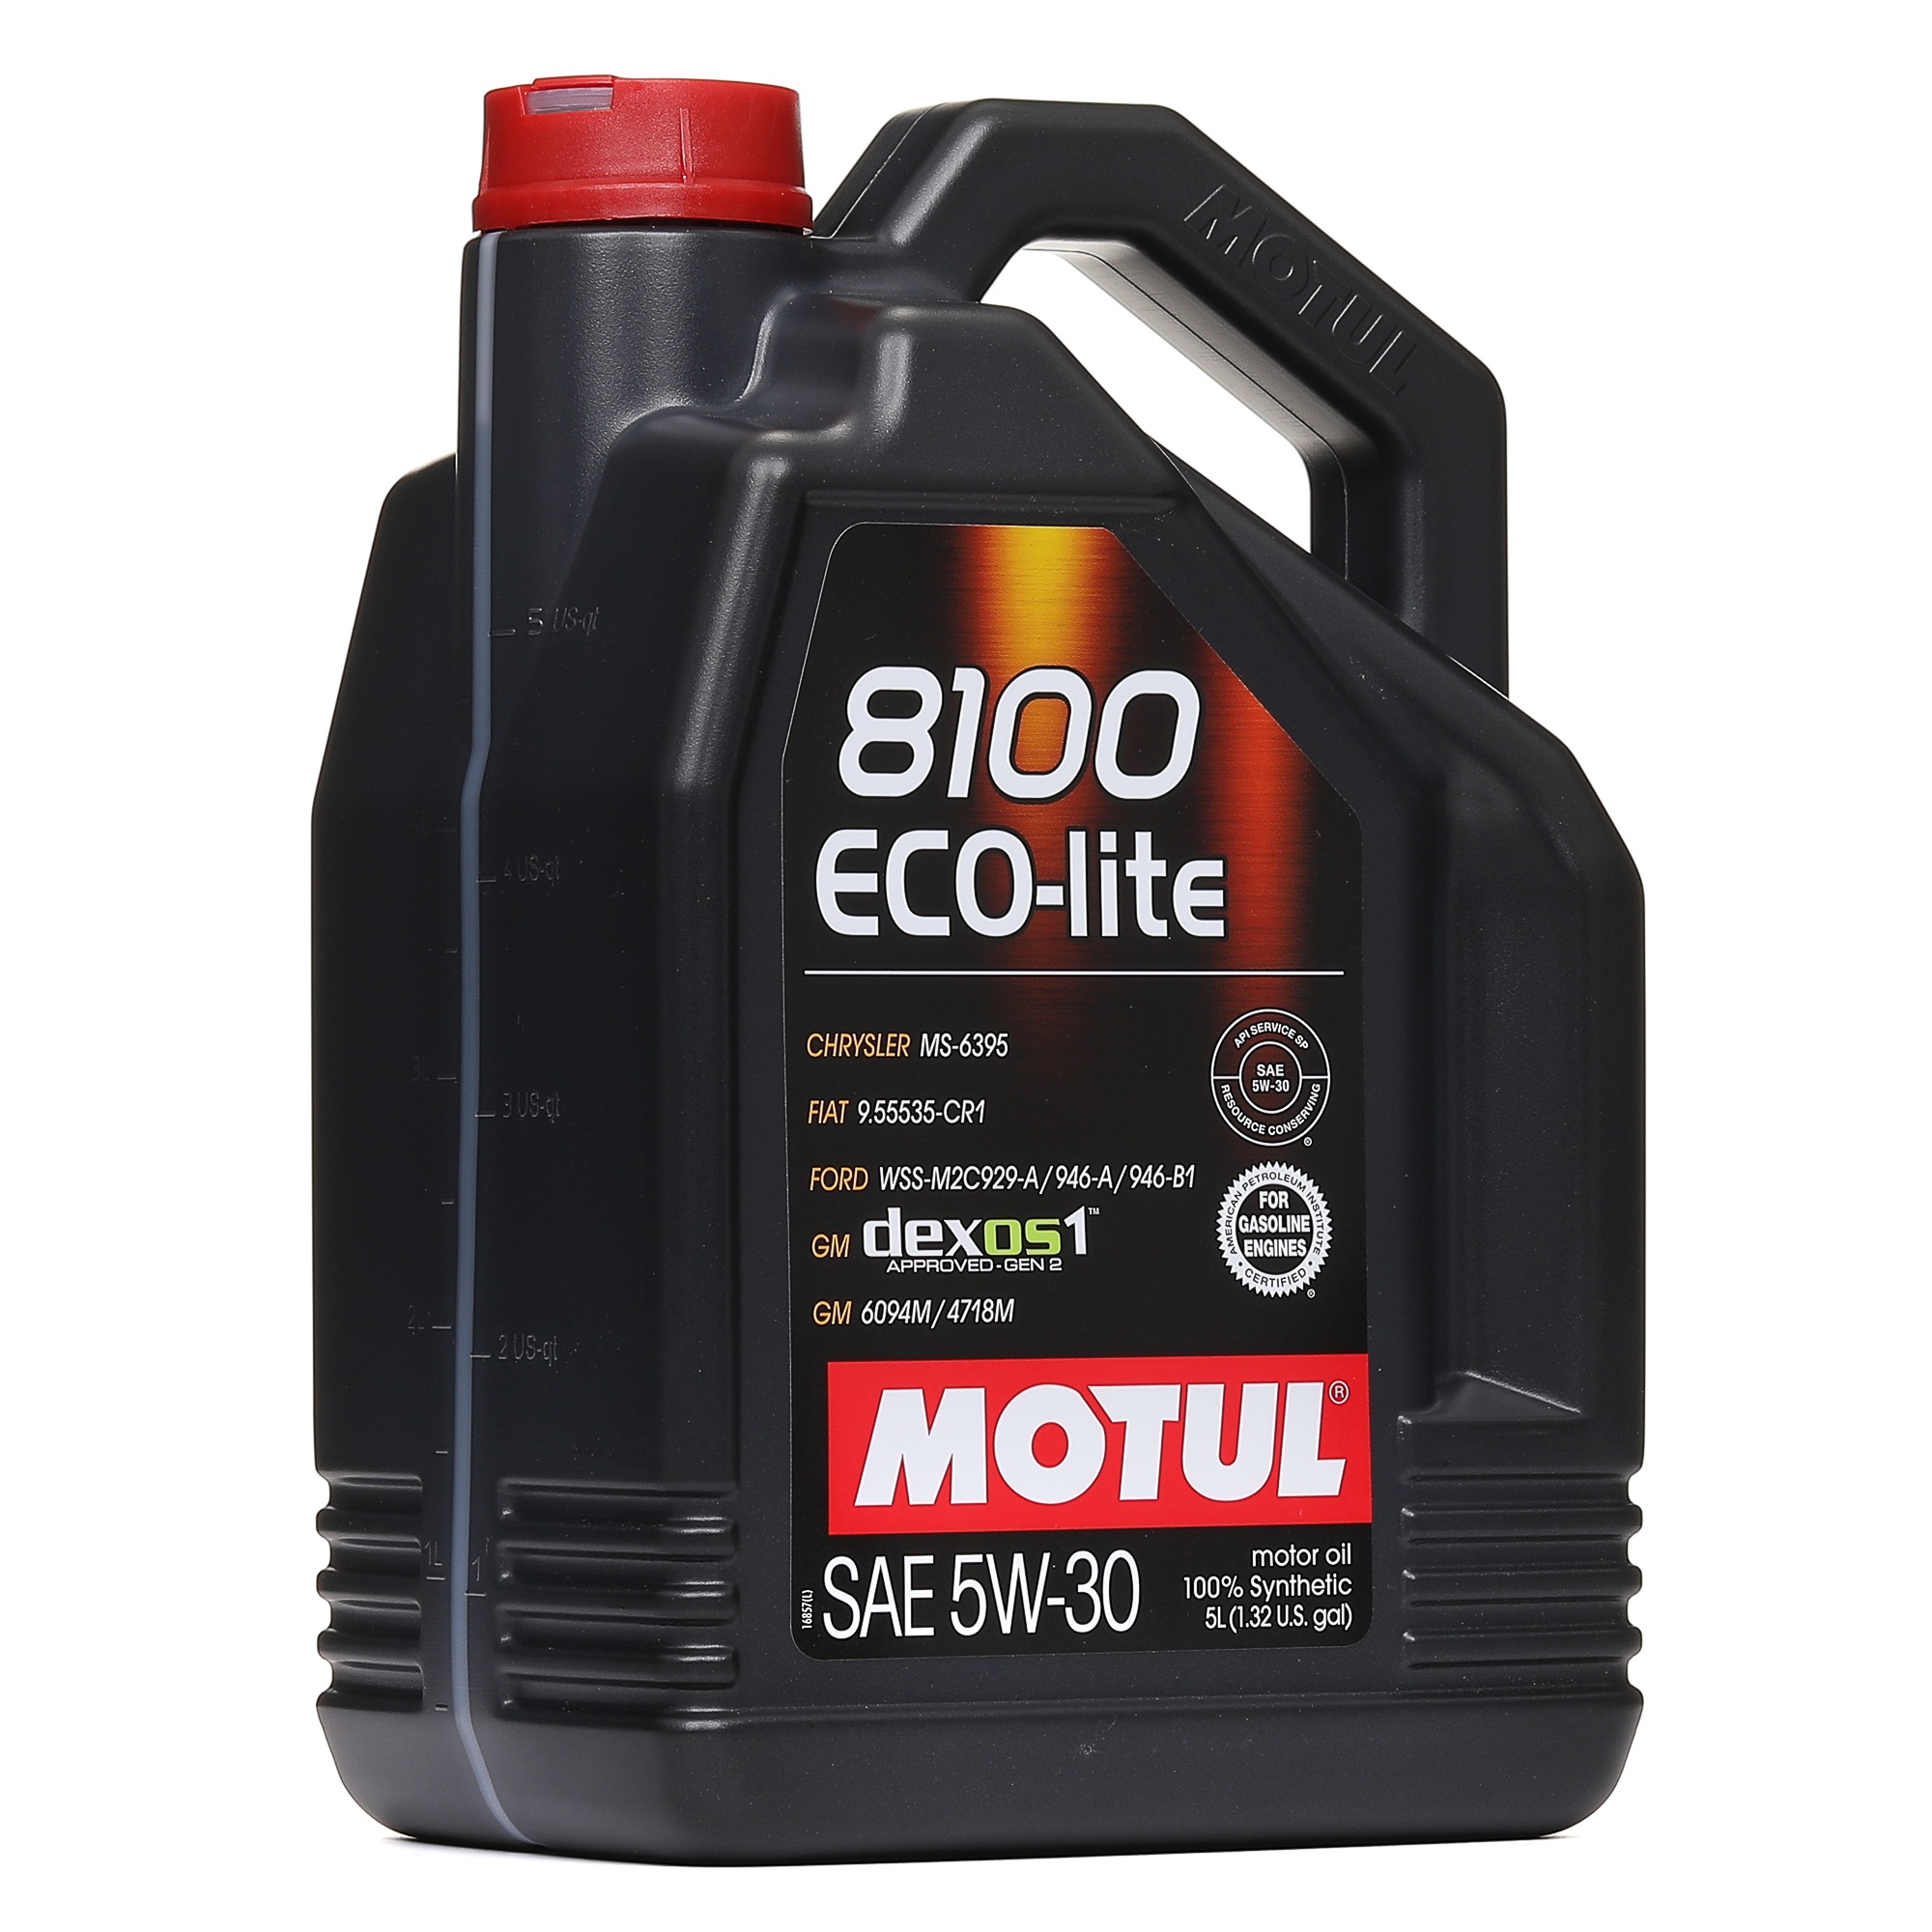 Automobile oil dexos 1 gen2 MOTUL petrol - 108214 8100, ECO-LITE